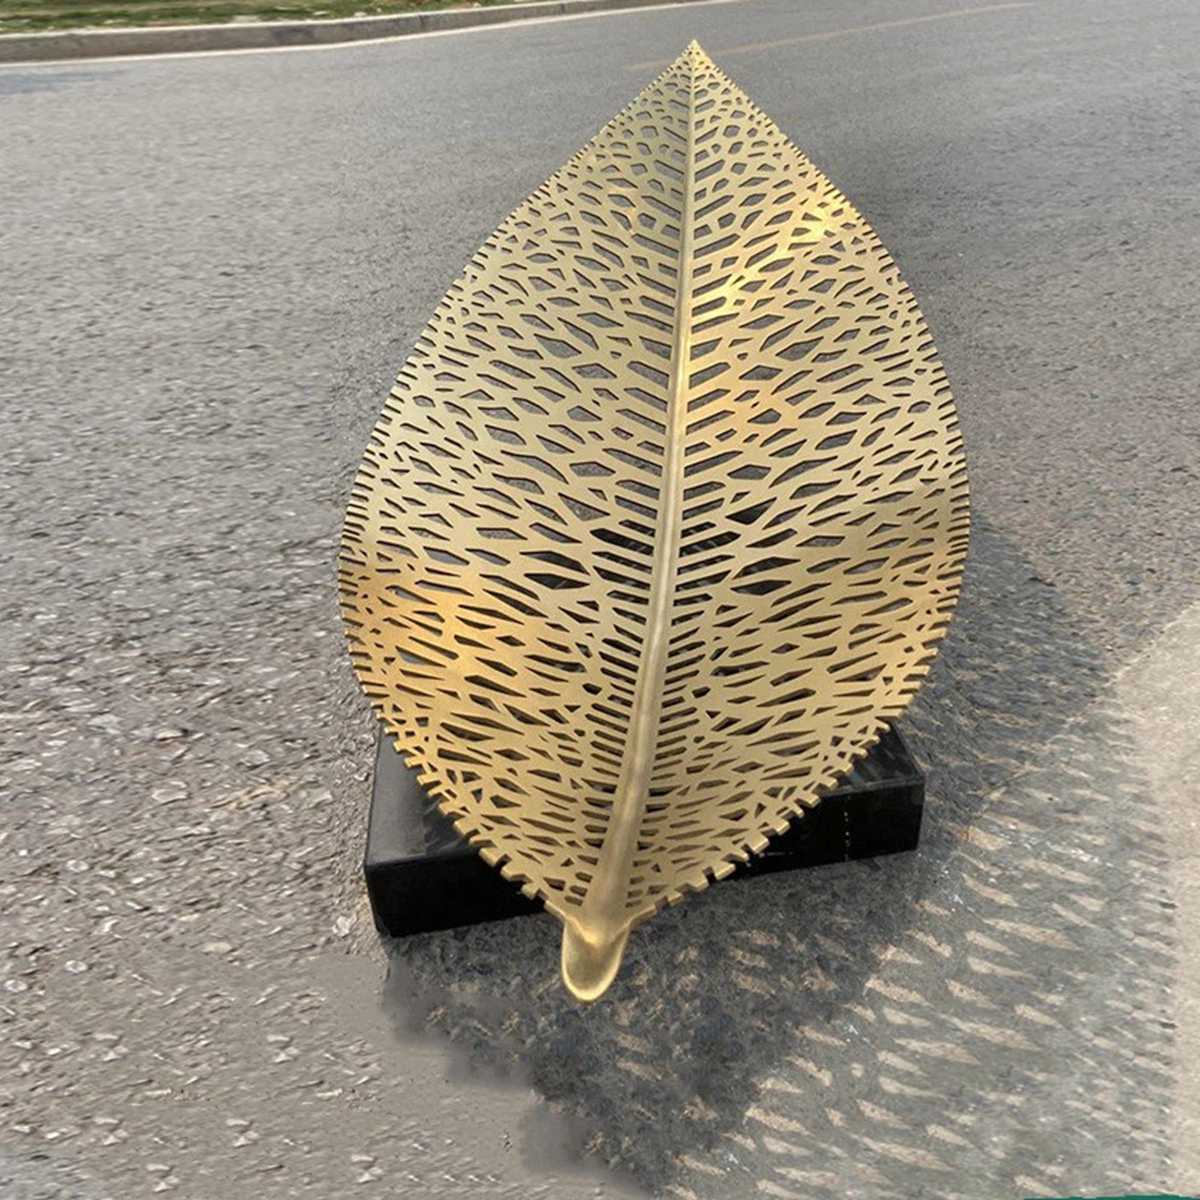 stainless steel leaf sculpture (3)